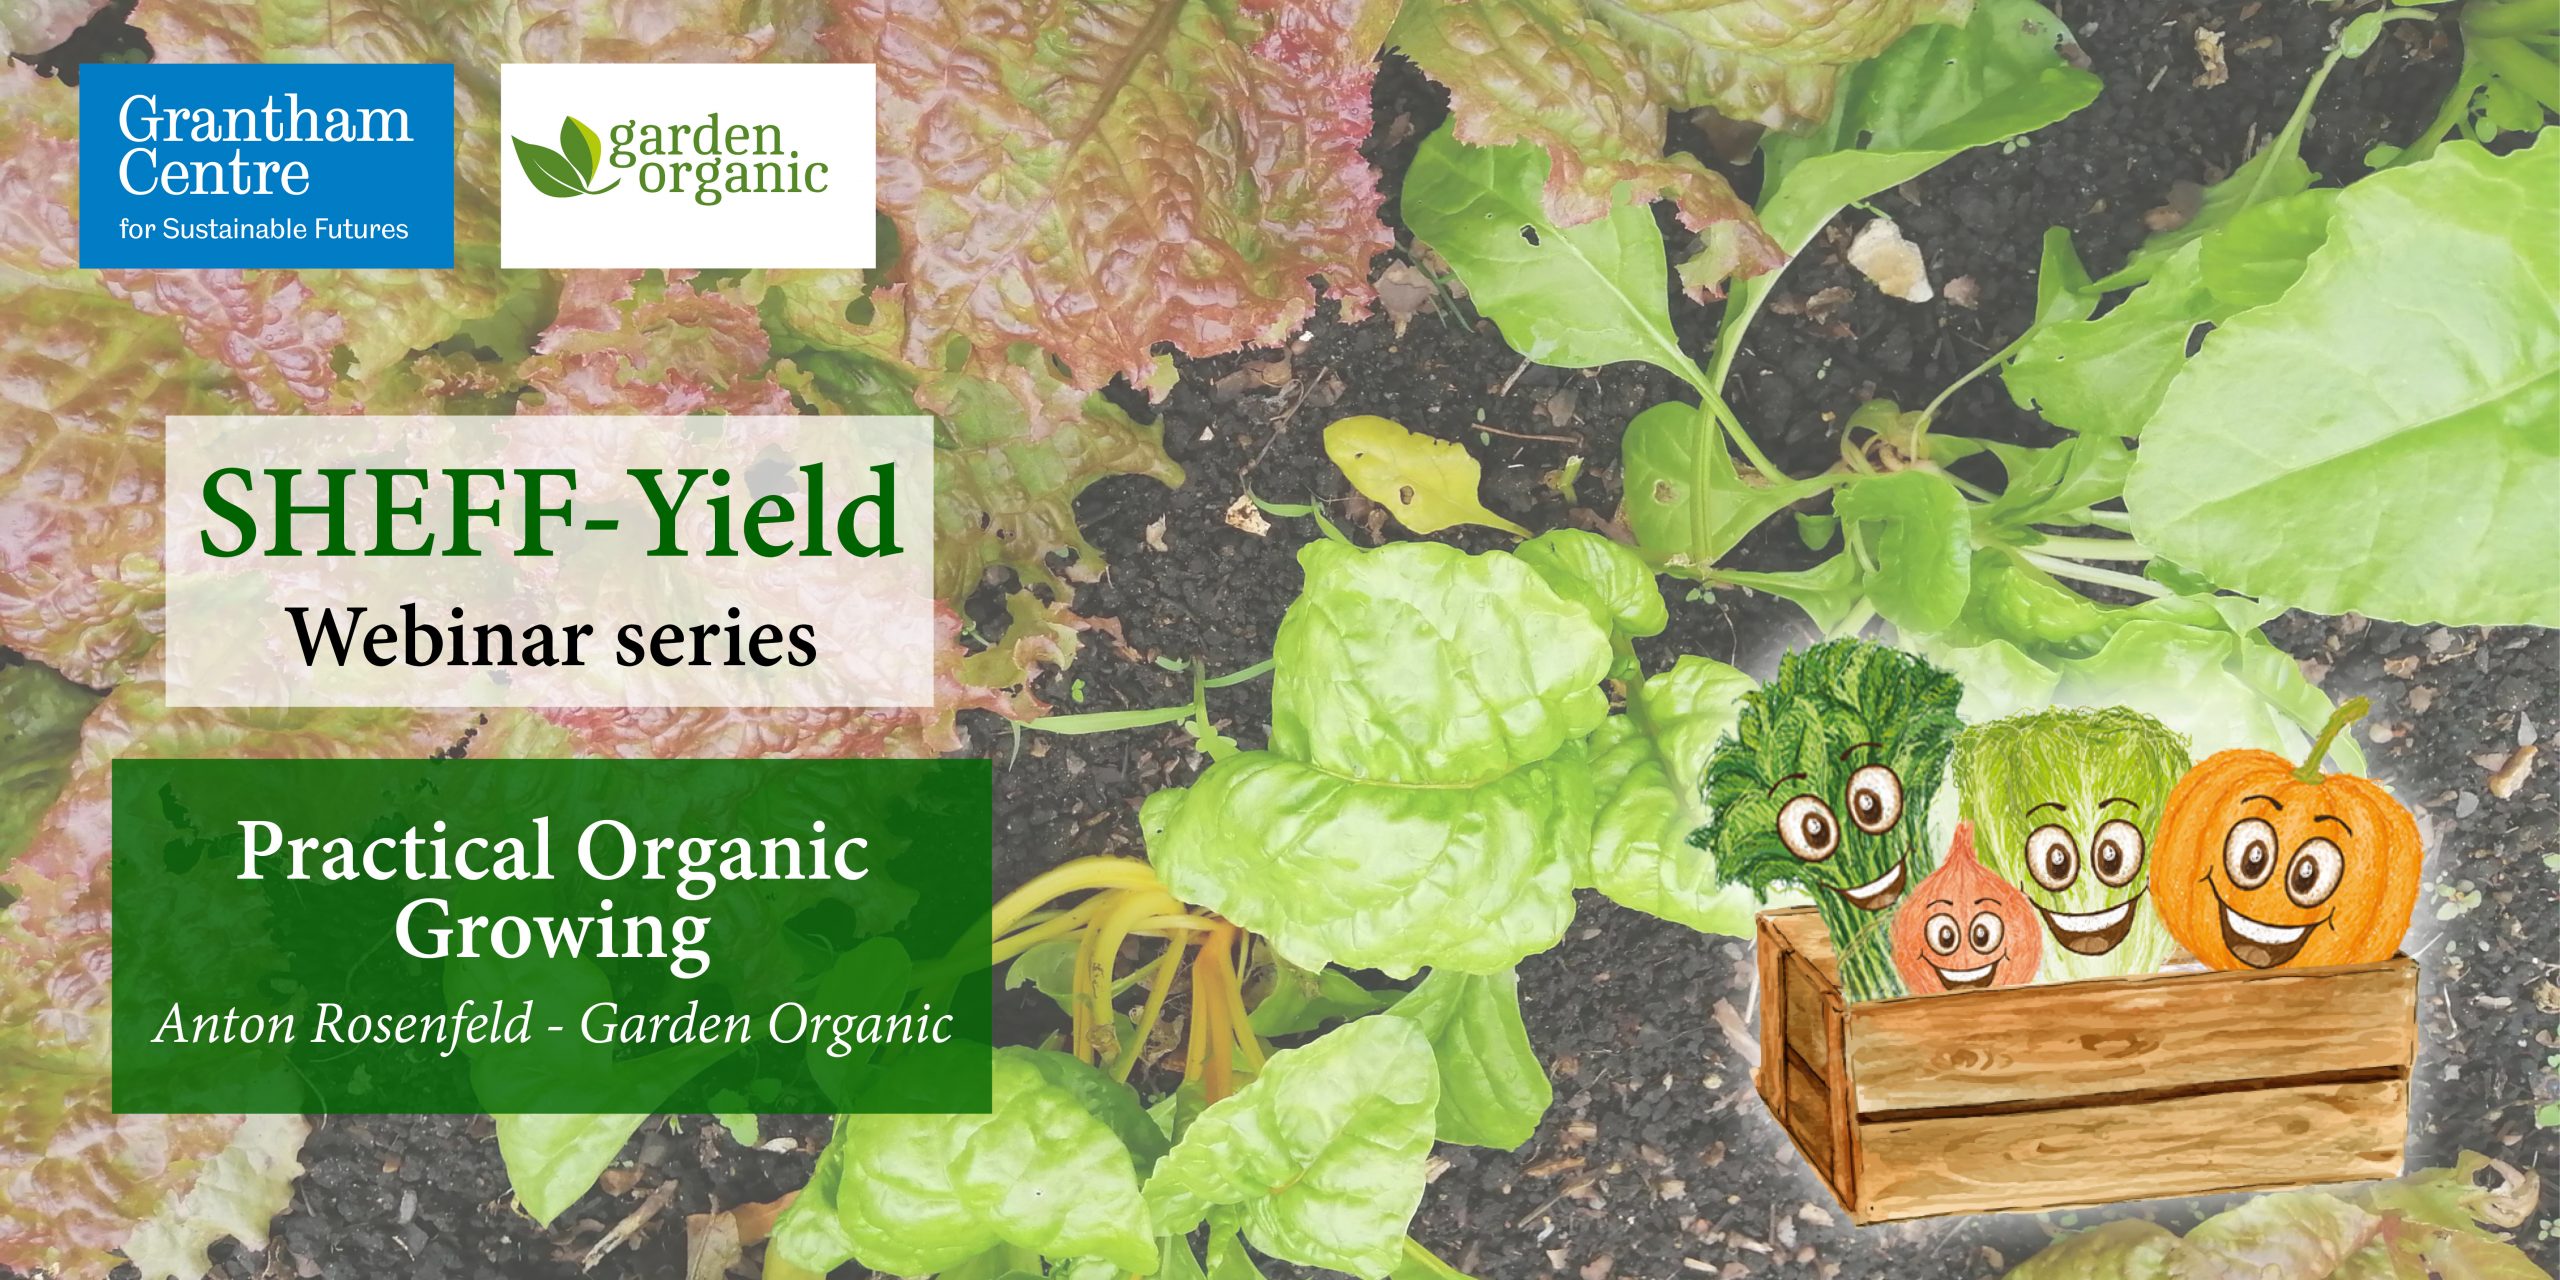 Practical Organic Growing